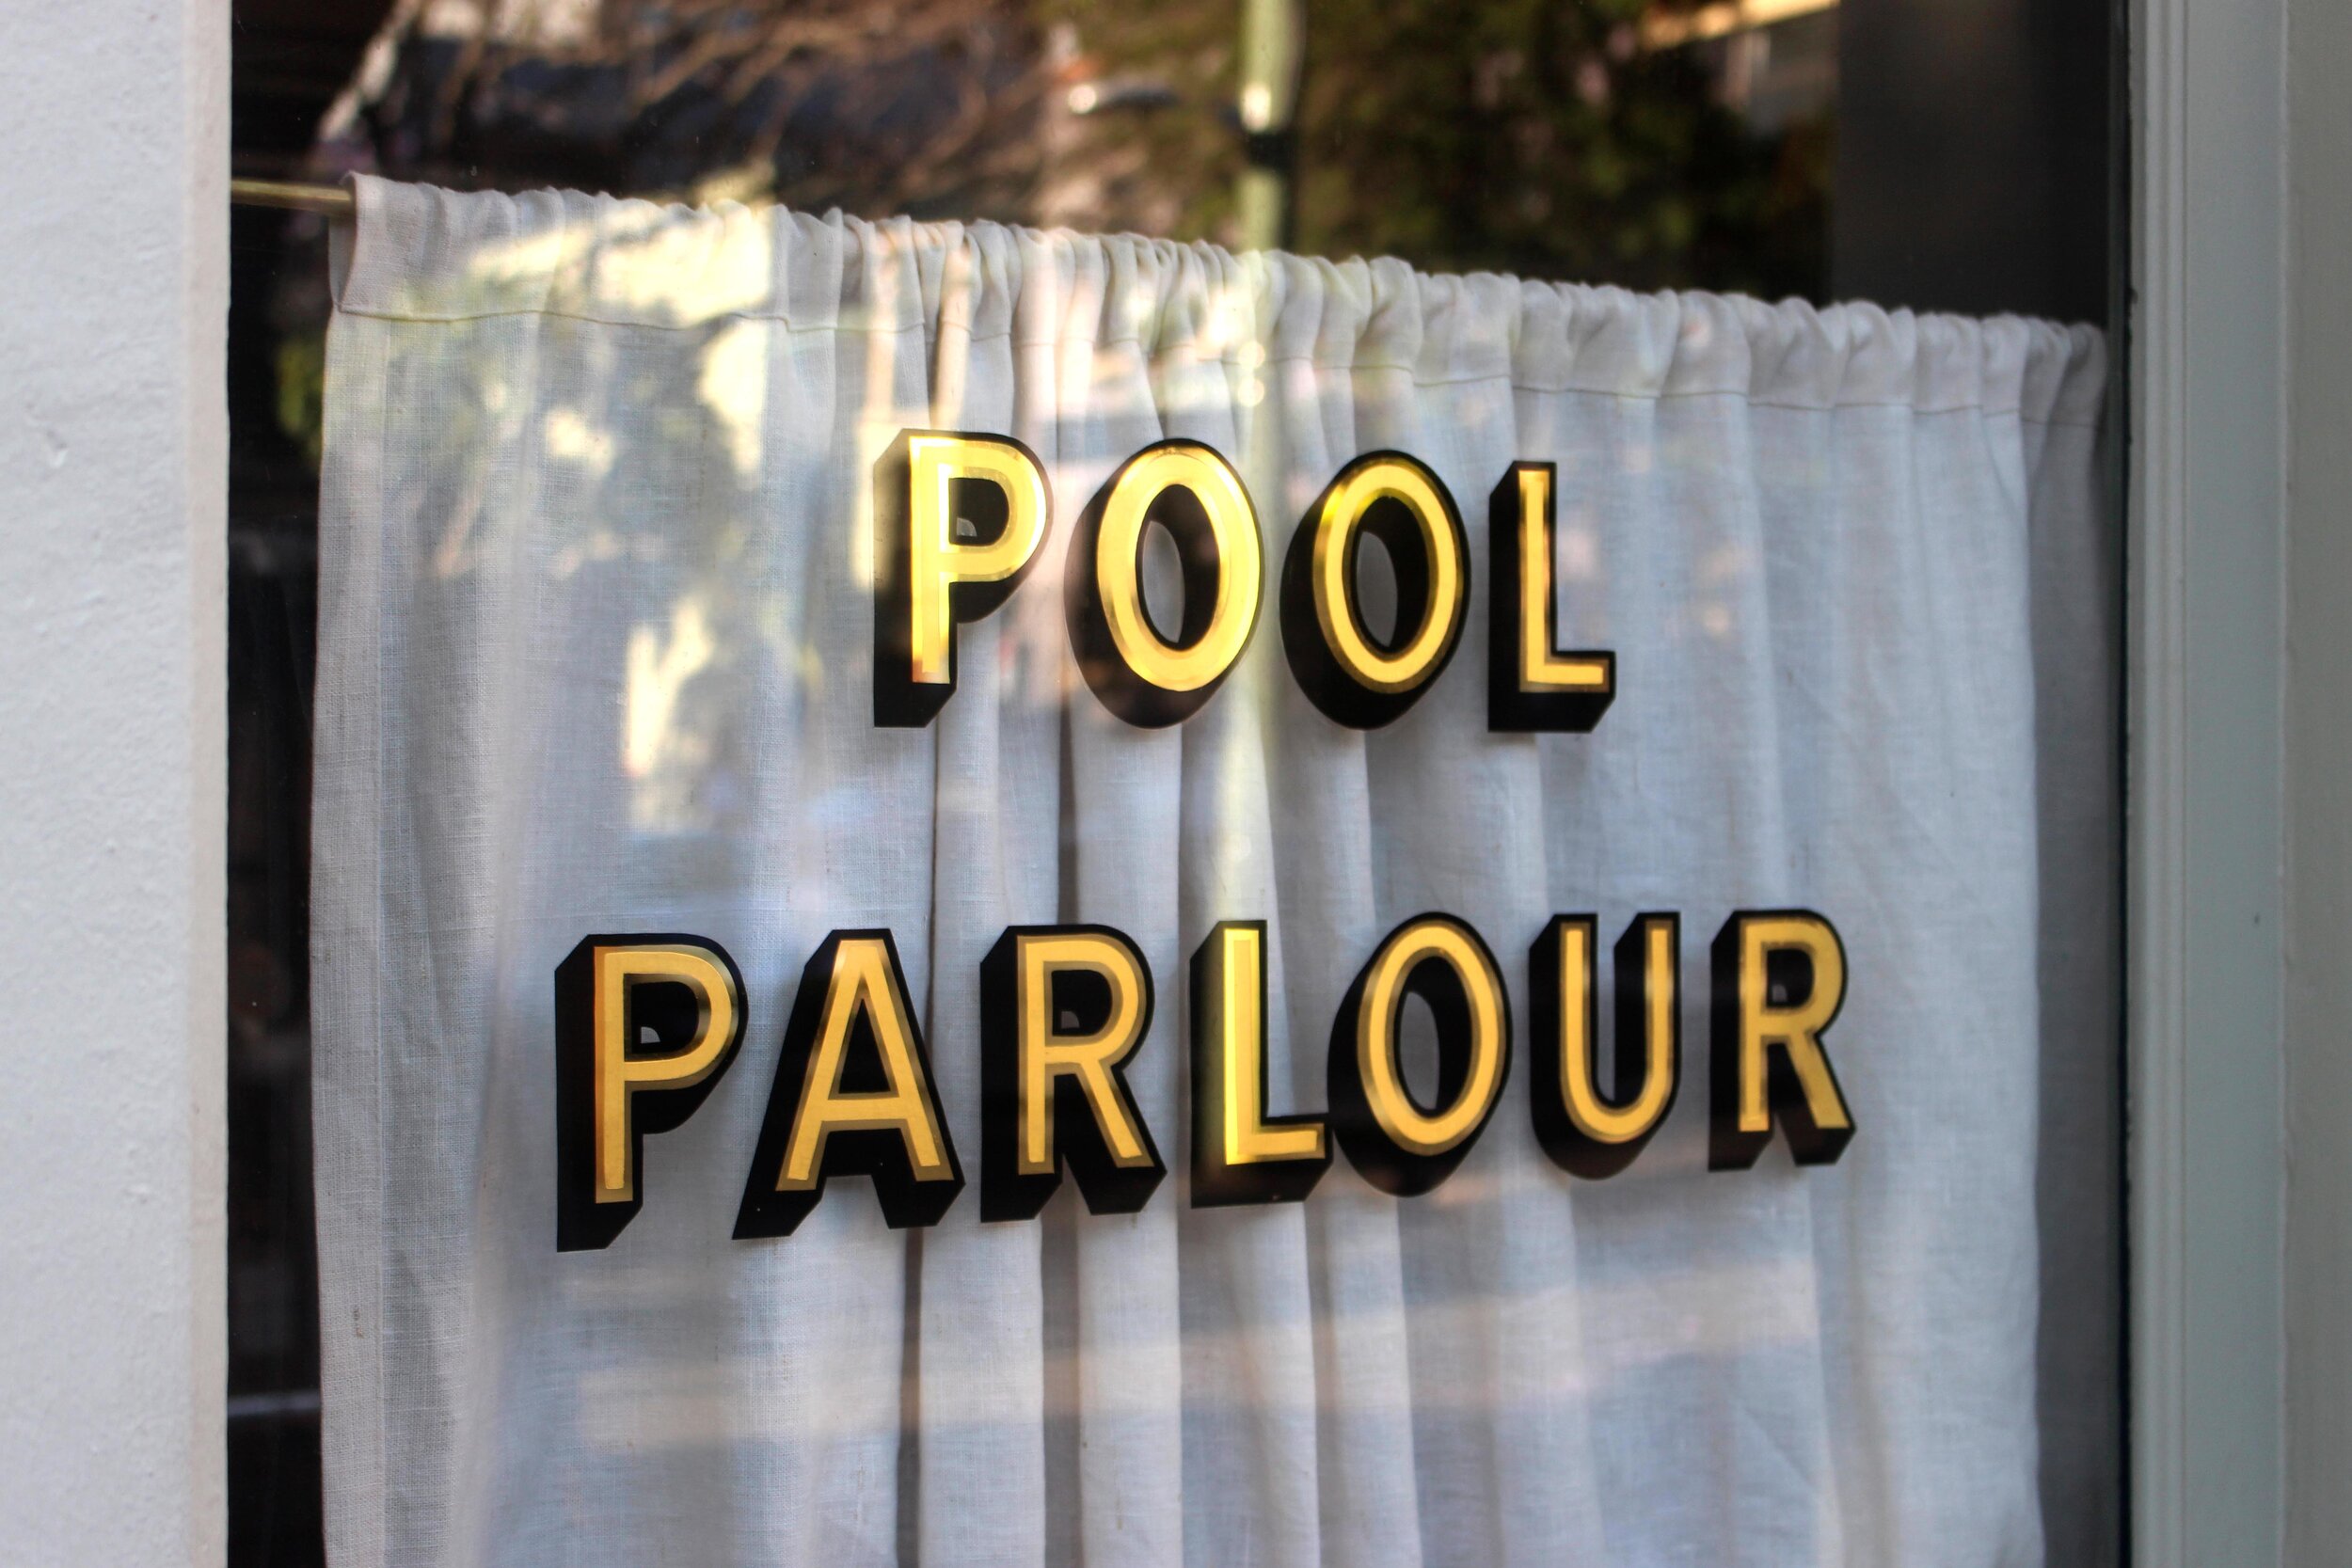 Pool parlour gold leaf sign